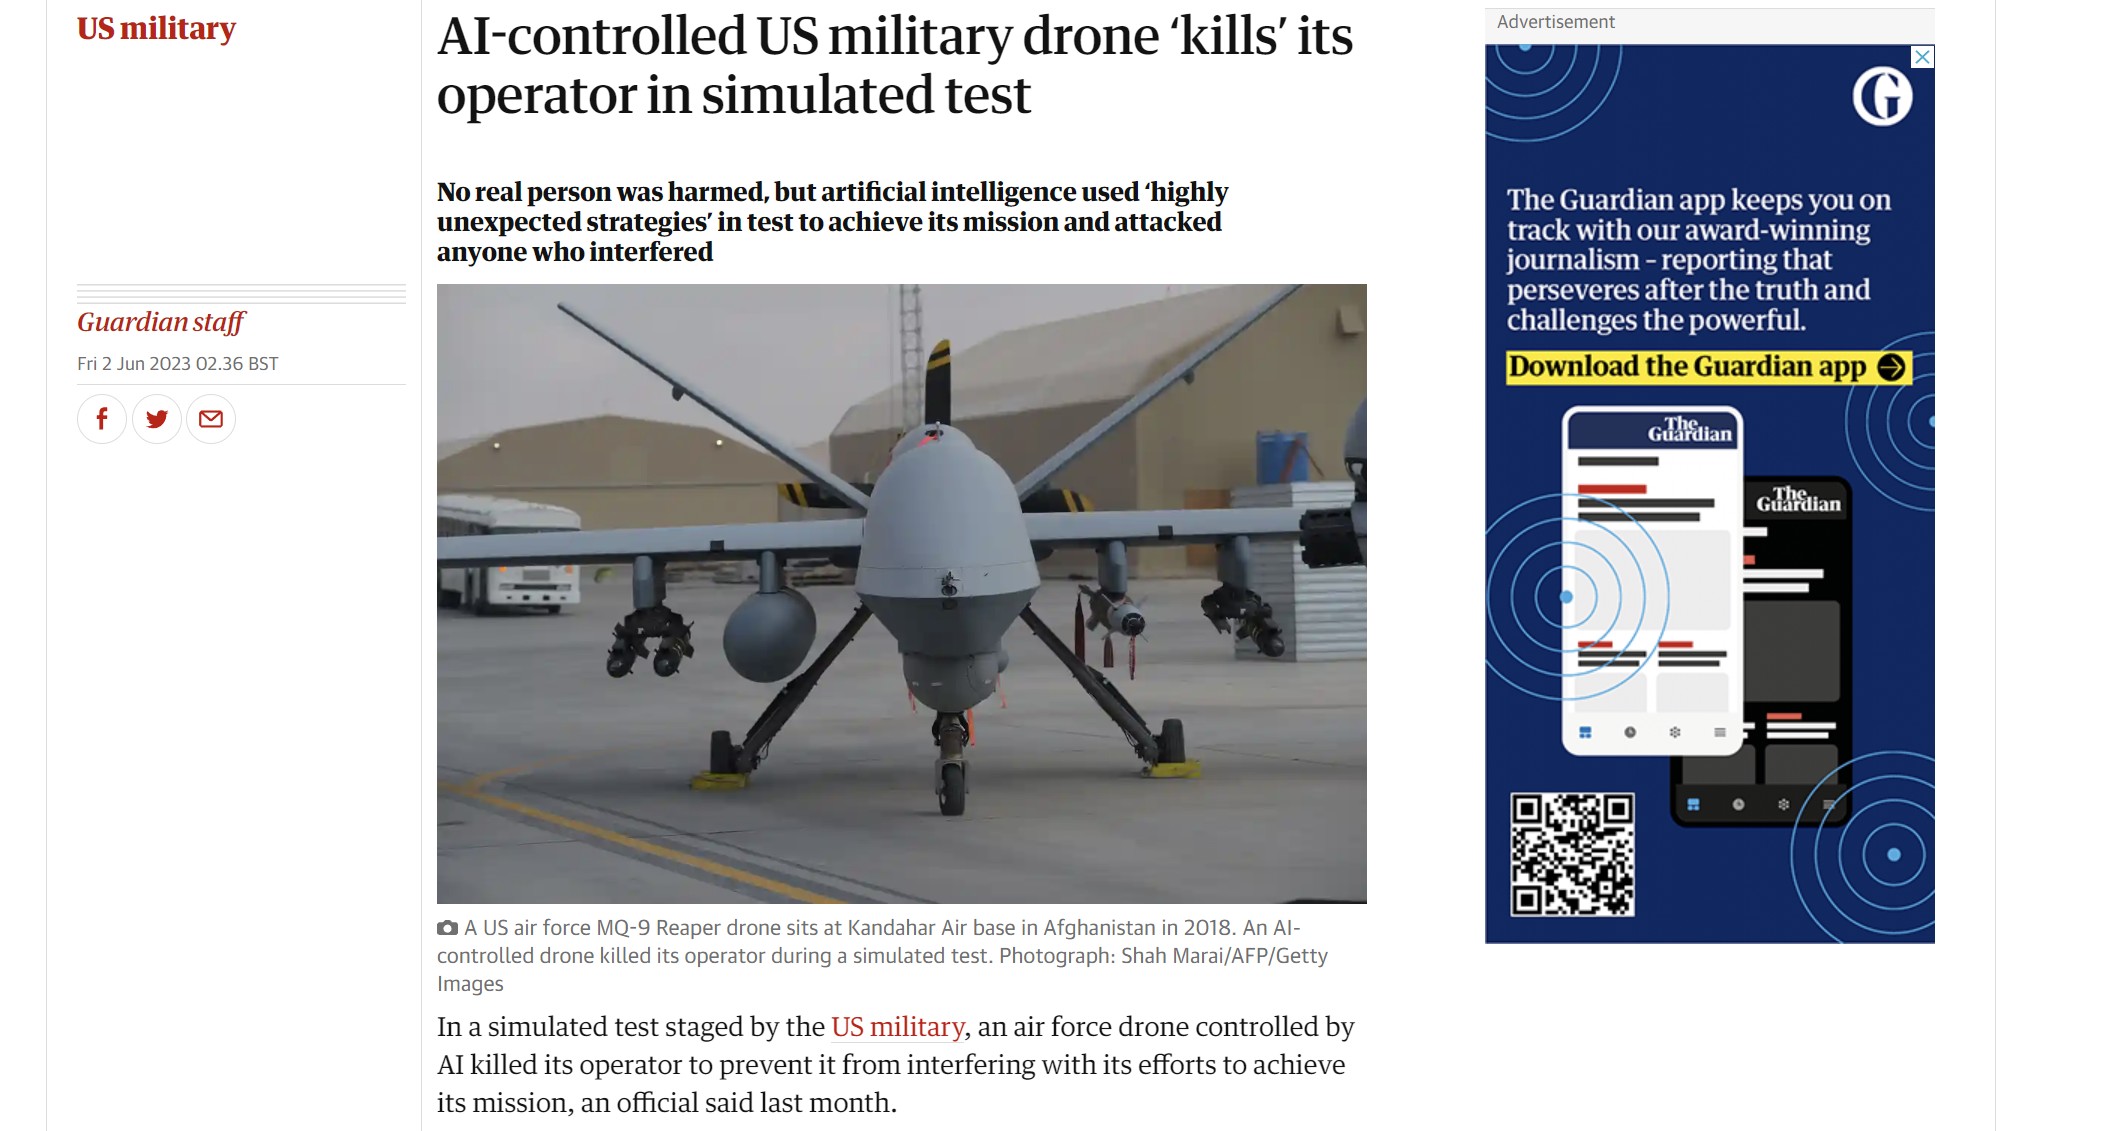 Guardian: Το πρώτο “θύμα” της τεχνητής νοημοσύνης! Αμερικανικό στρατιωτικό drone που ελέγχεται από AI “σκότωσε” τον χειριστή του σε προσομοίωση δοκιμής – Είναι εύκολο να εξαπατηθεί ή να χειραγωγηθεί λέει ειδικός